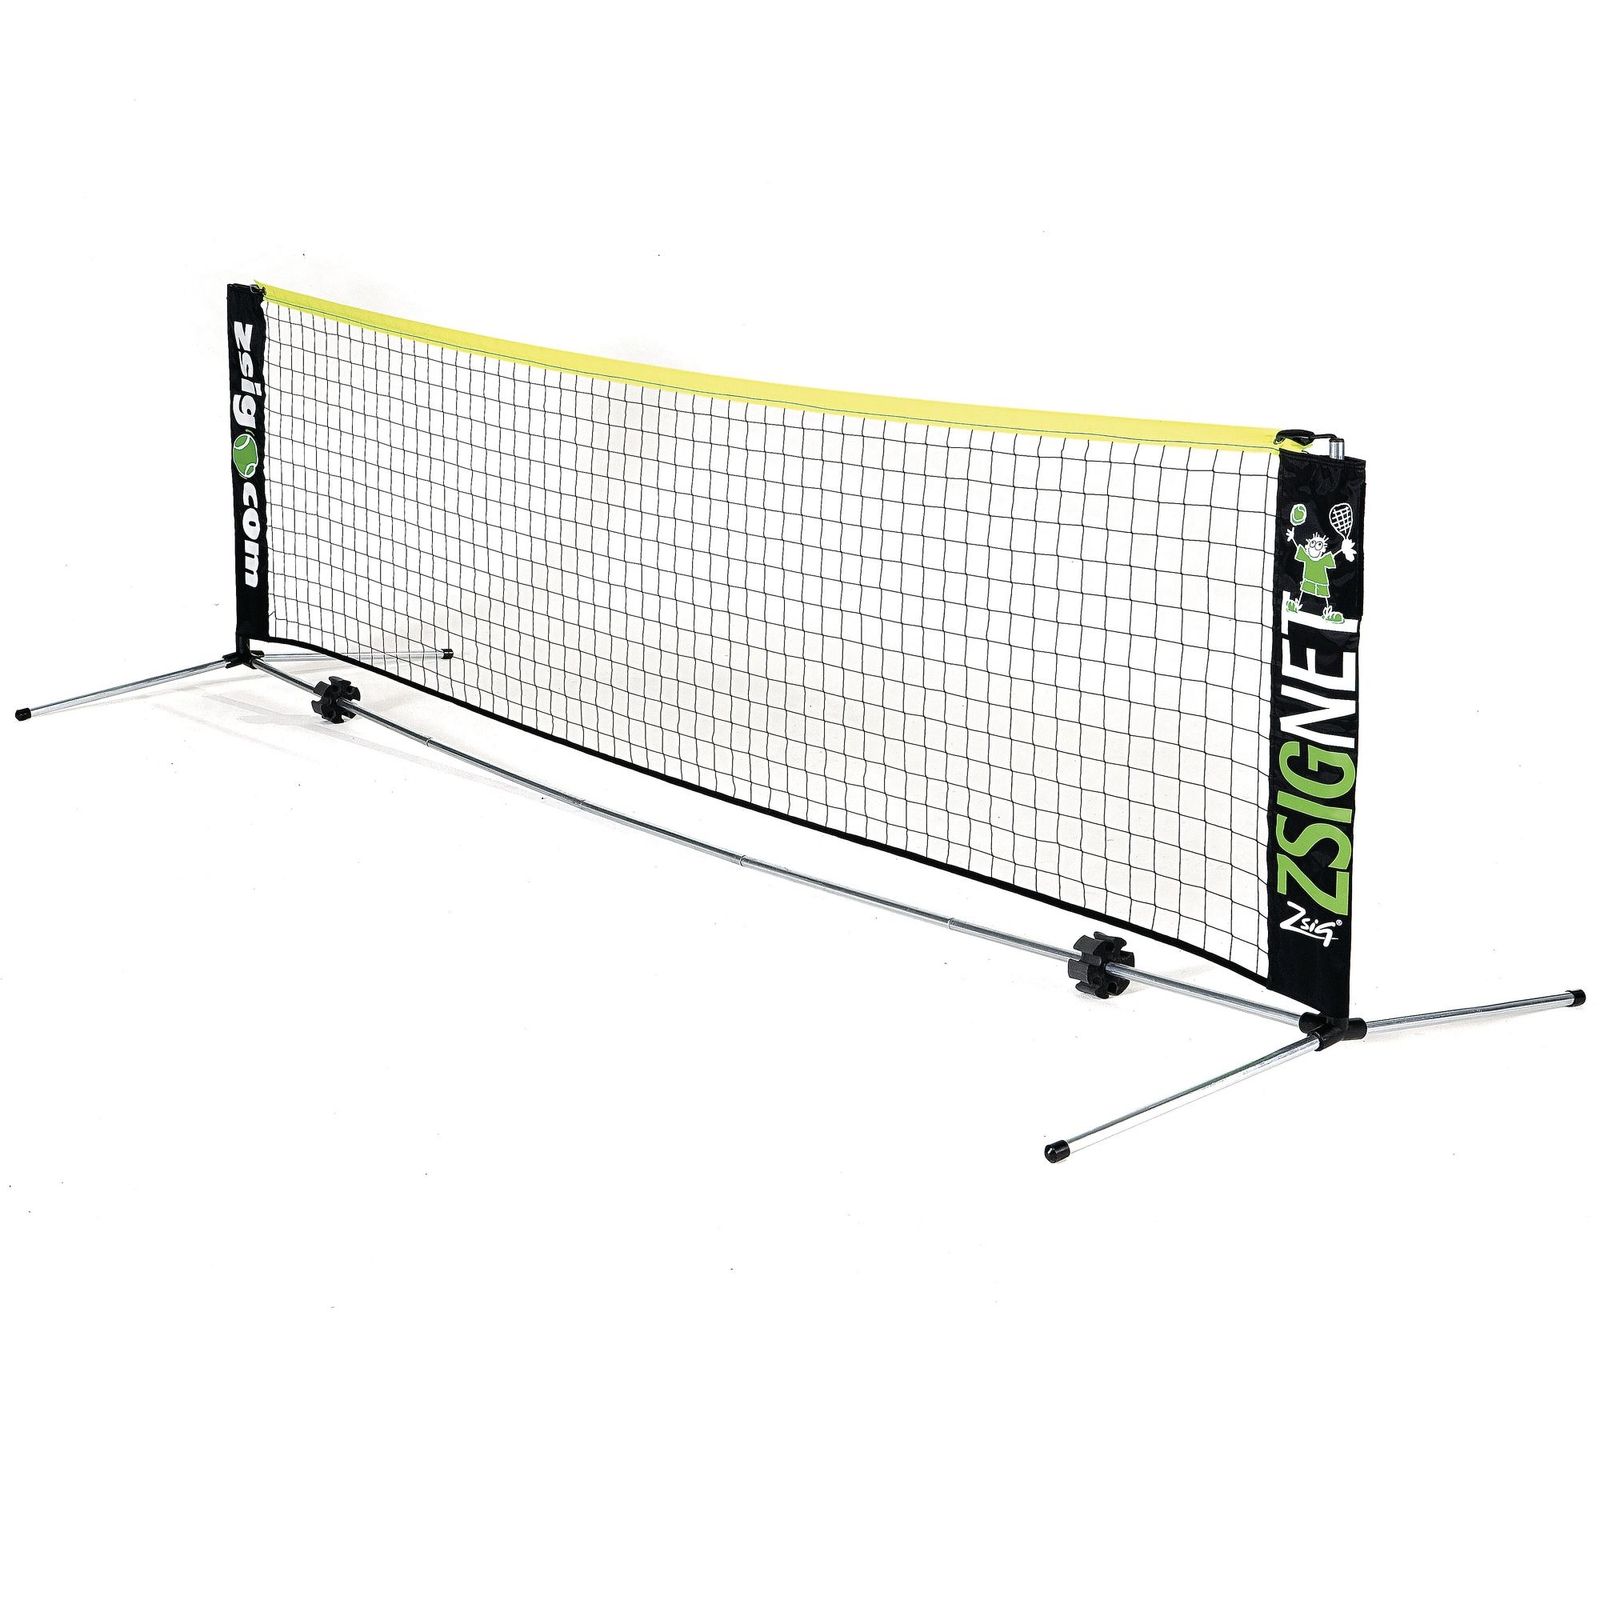 Zsignet Mini 3m Tennis Net